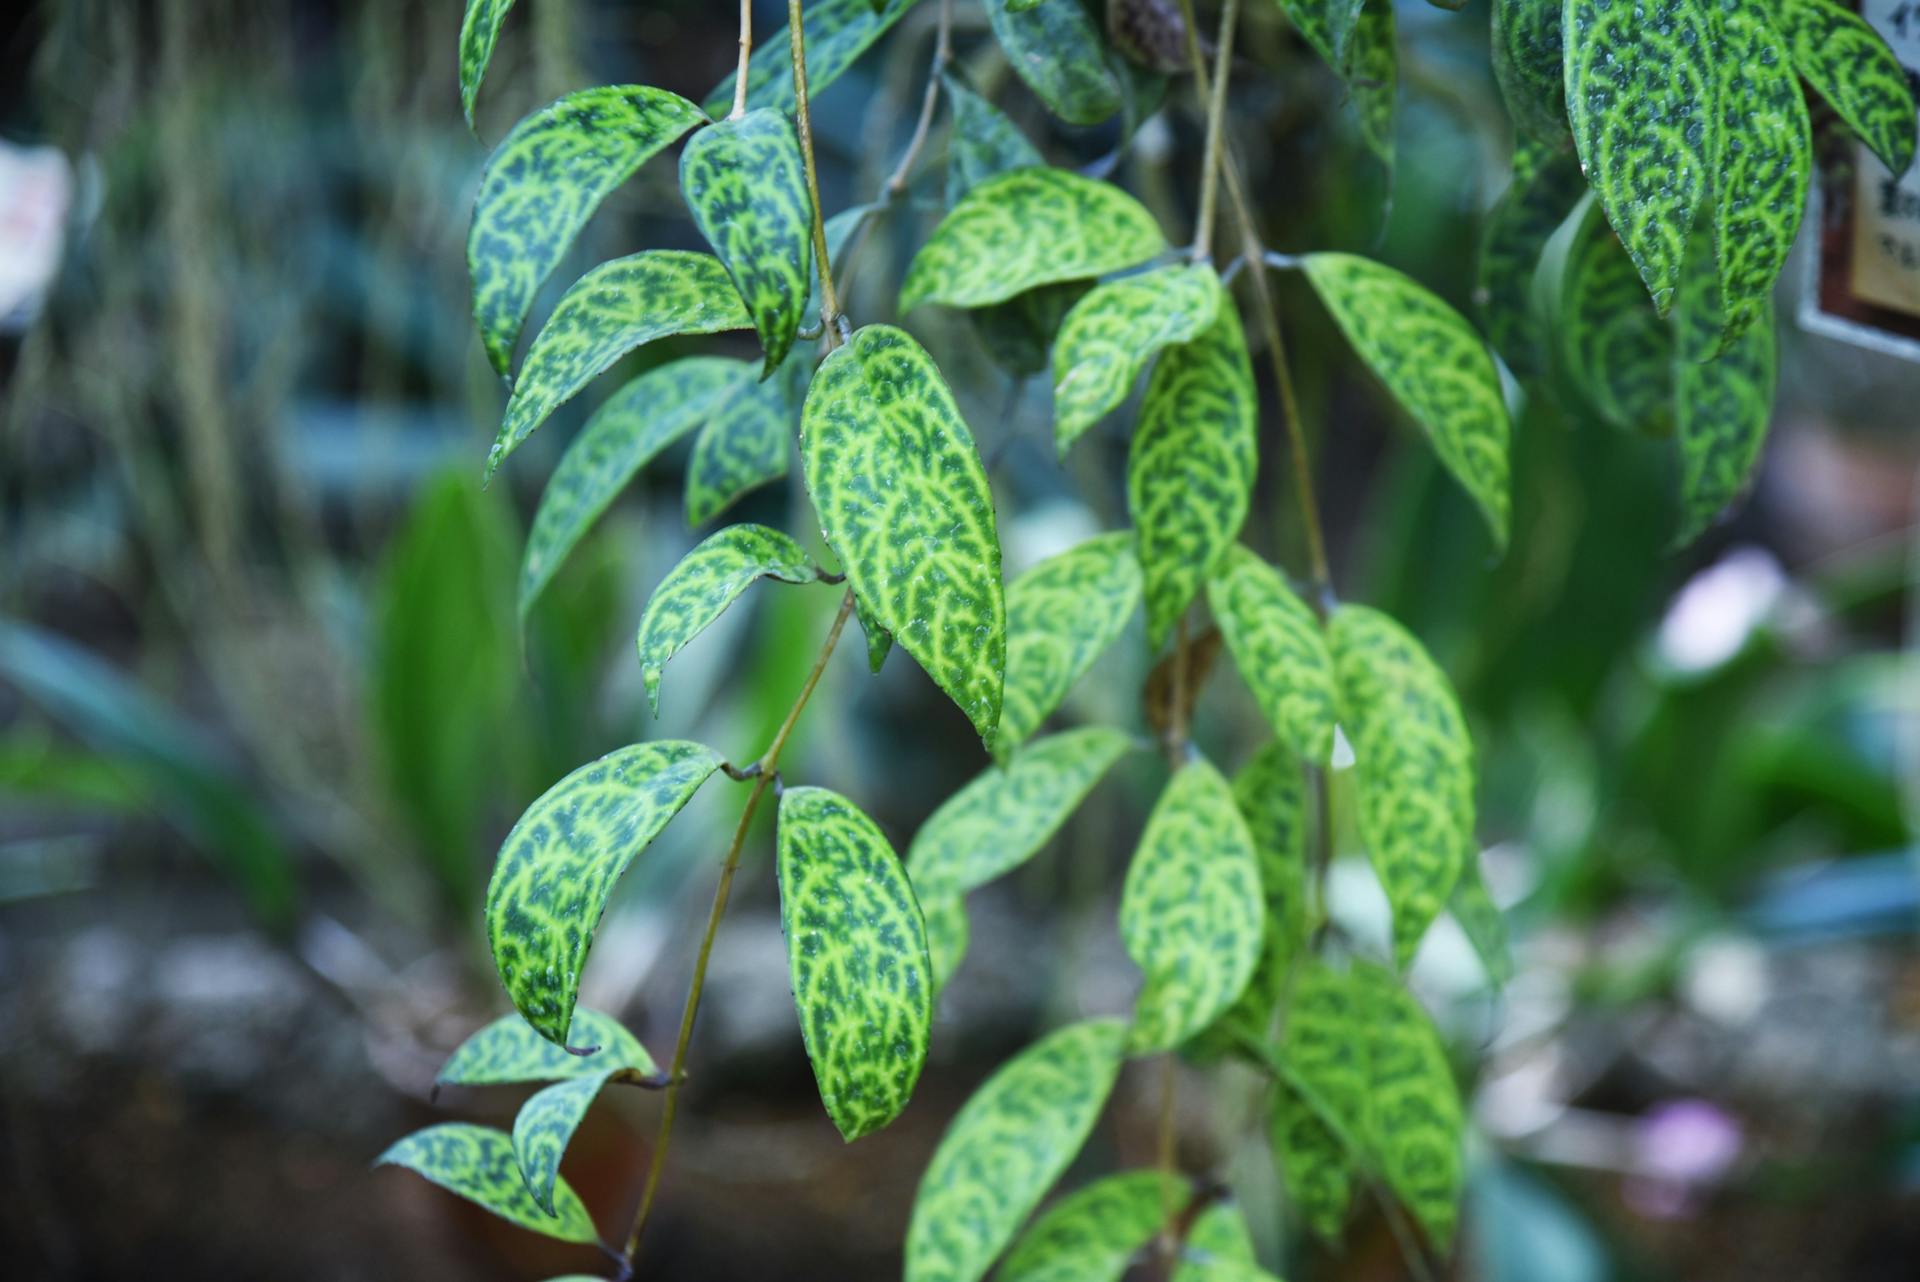 Aeschynanthus leaves